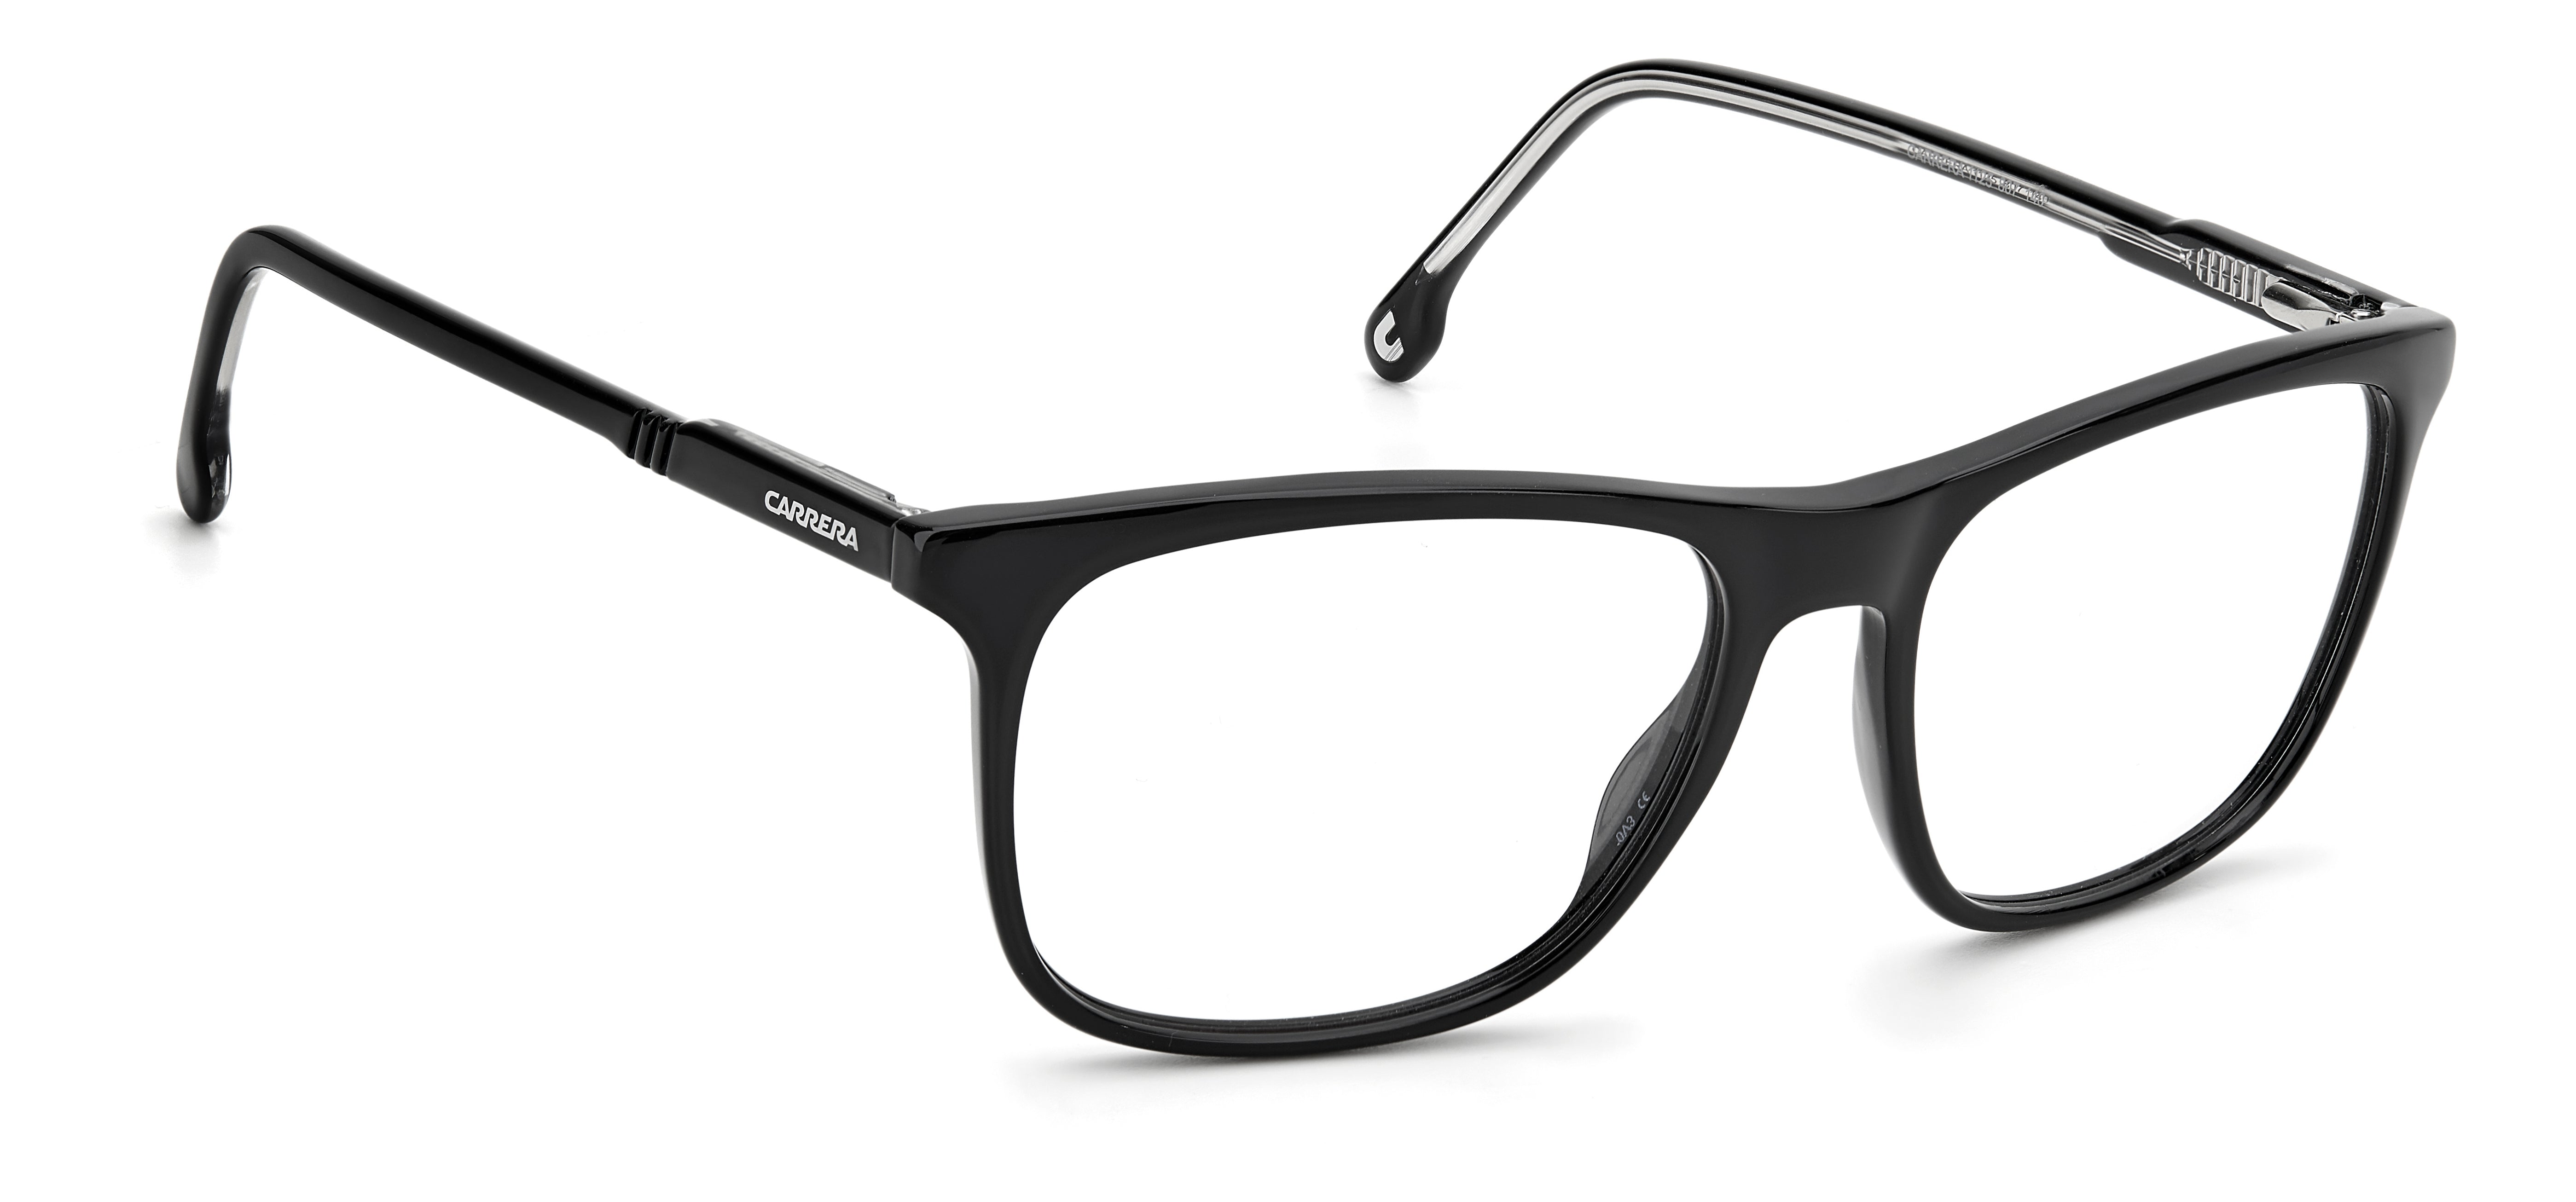 Sunglasses,specsmart, spec smart, glasses, eye glasses glasses frames, where to get glasses in lagos, eye treatment, wellness health care group, carrera 1125